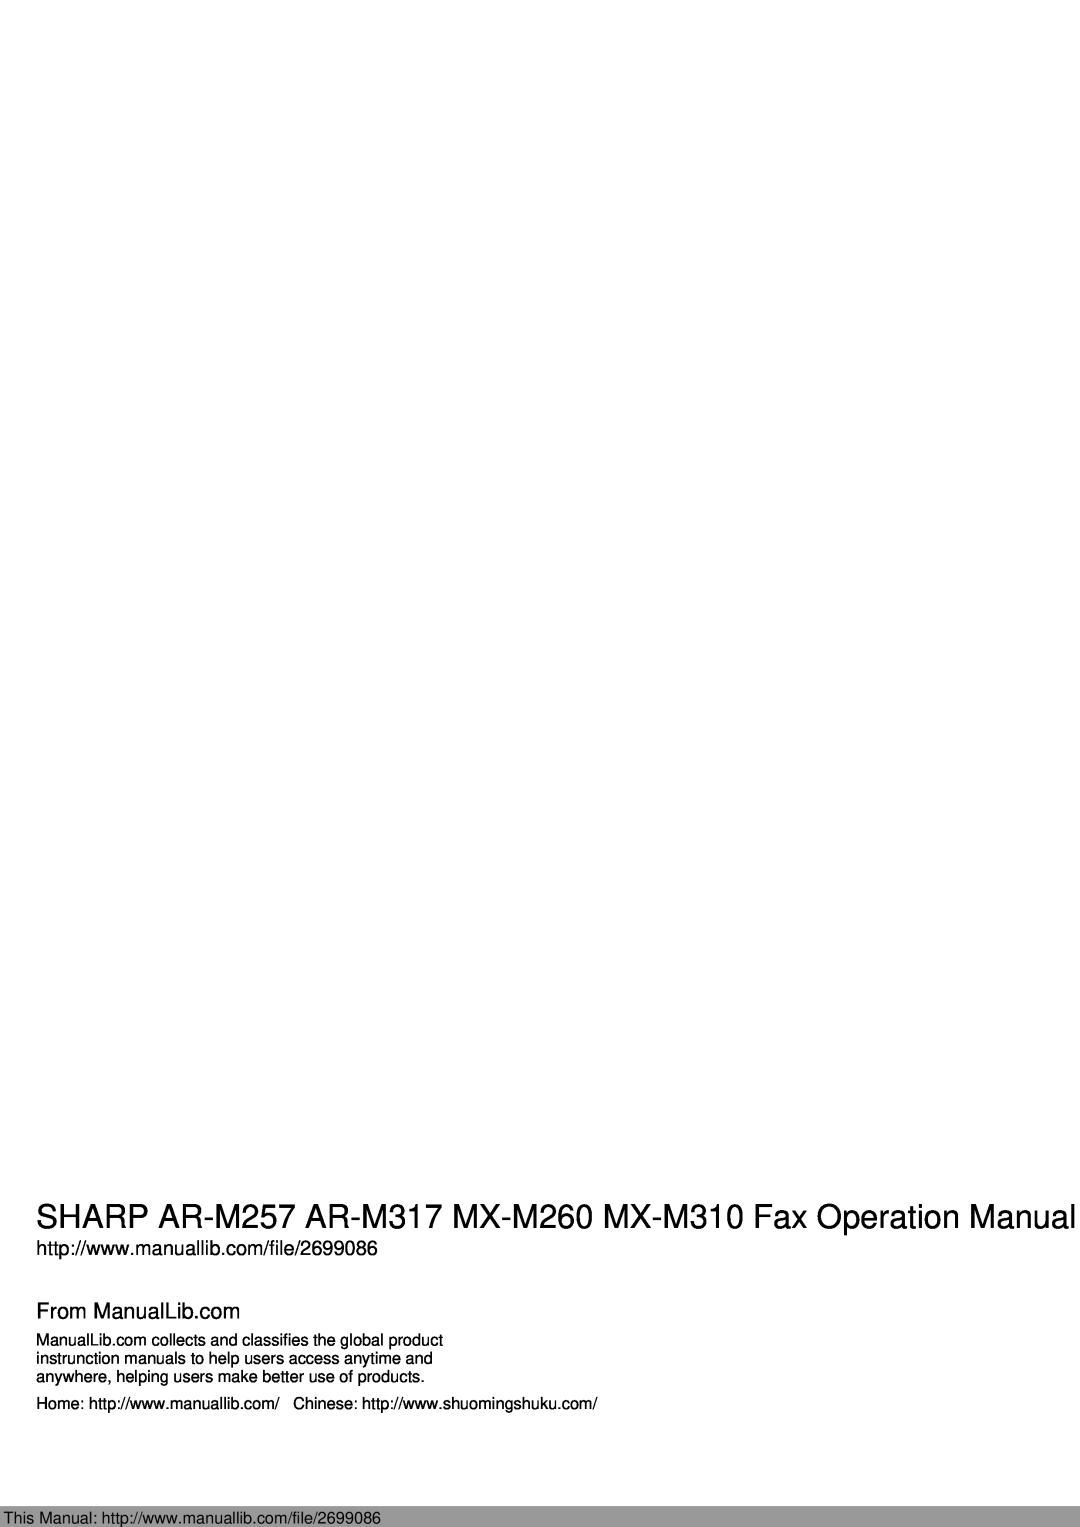 Sharp operation manual SHARP AR-M257 AR-M317 MX-M260 MX-M310 Fax Operation Manual, From ManualLib.com 